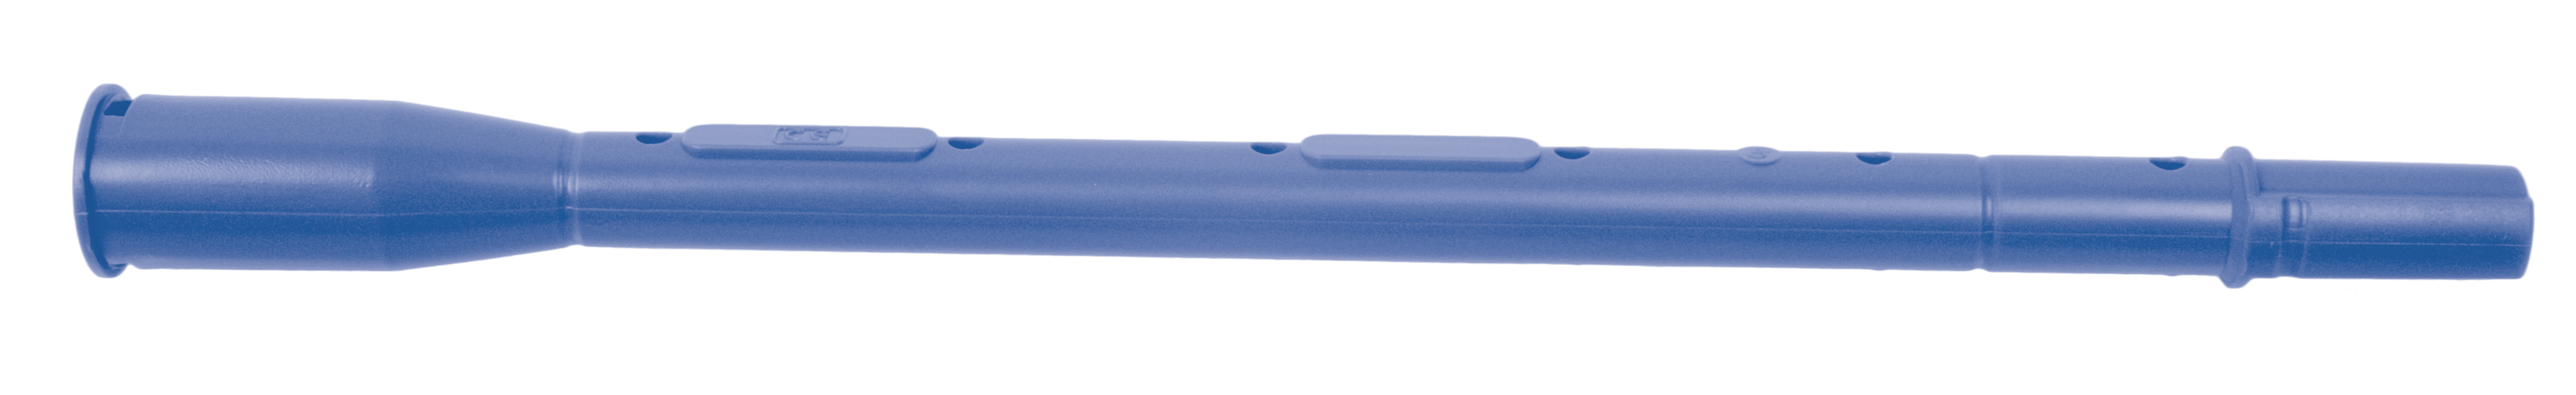 Endoskop-Schutzhülse, blau 209 mm, verlängerbar, autoklavierbar